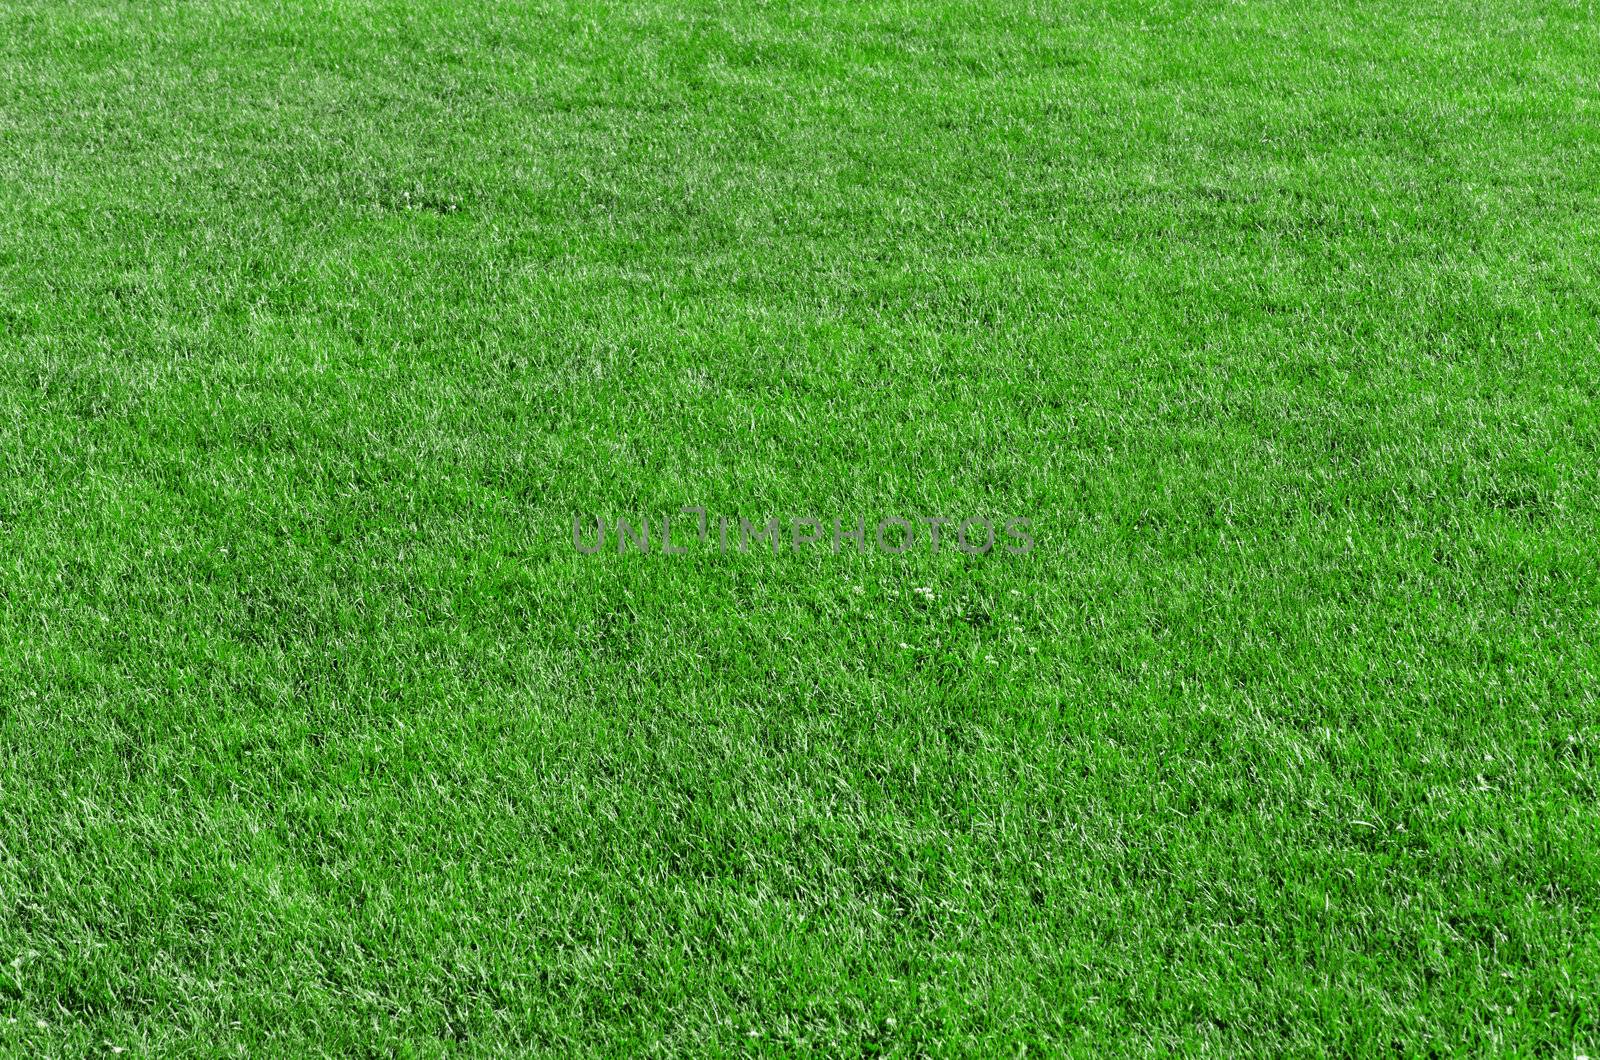 Beautiful green grass - horizontal field shot with selective focus